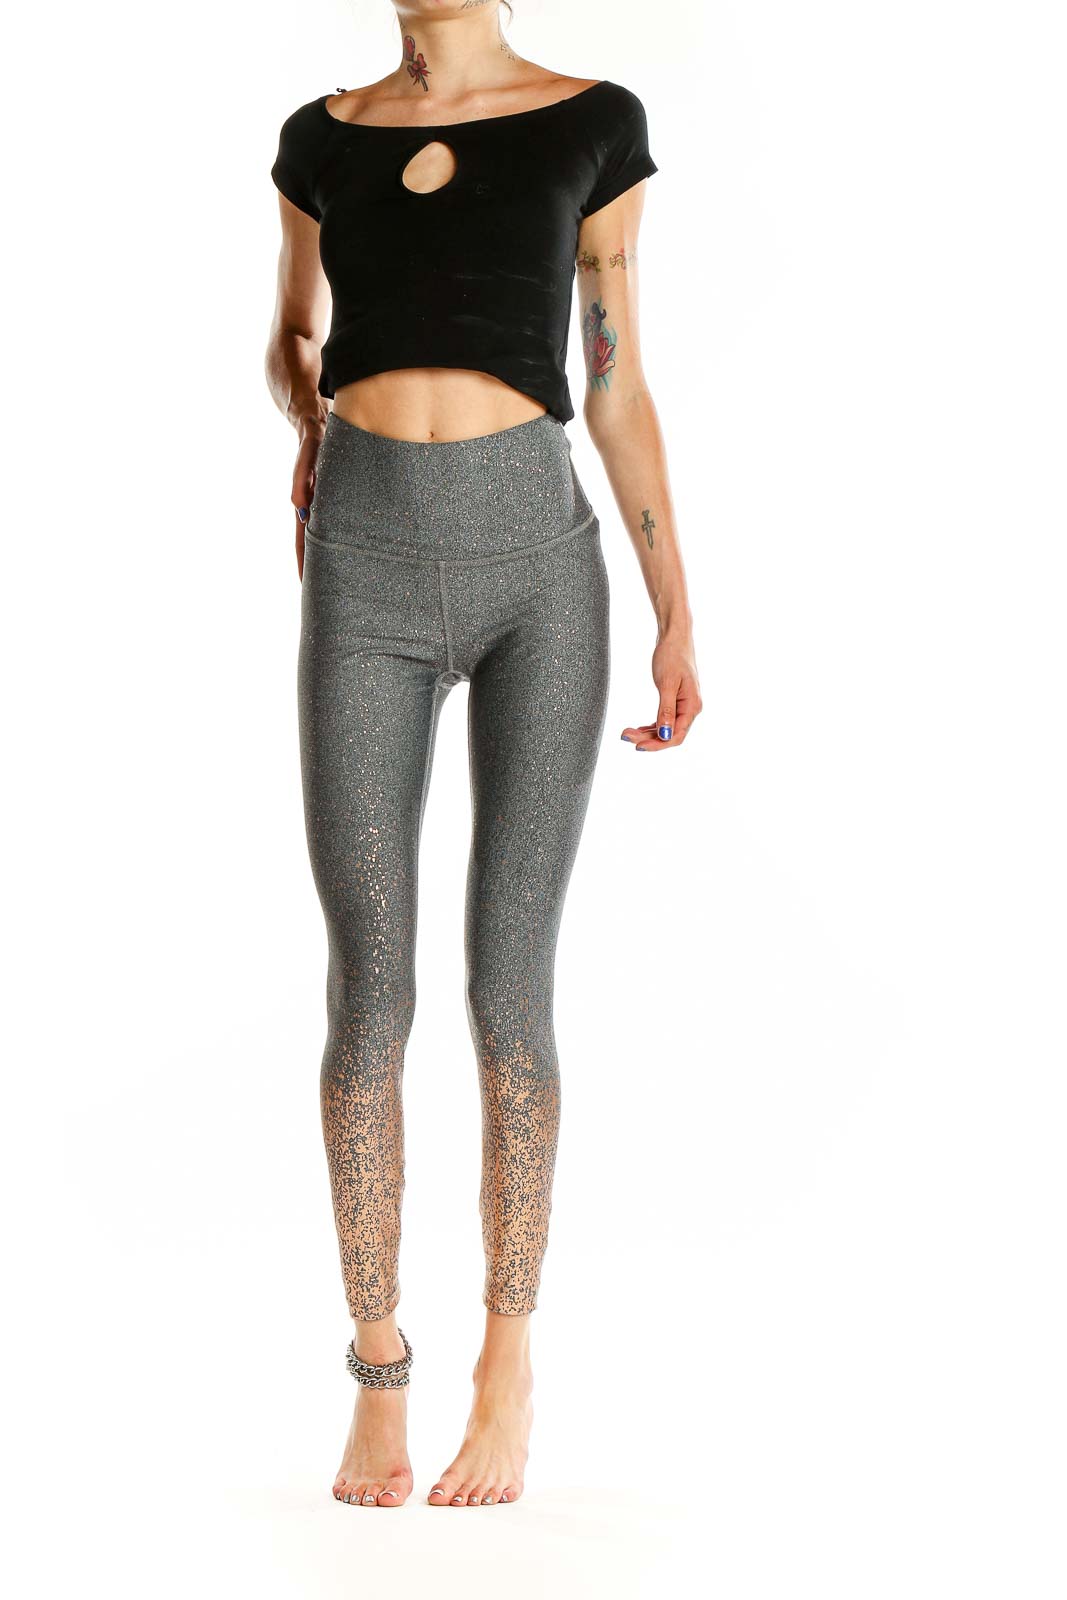 Beyond Yoga - Gray Shimmer Activewear Leggings Polyester Spandex